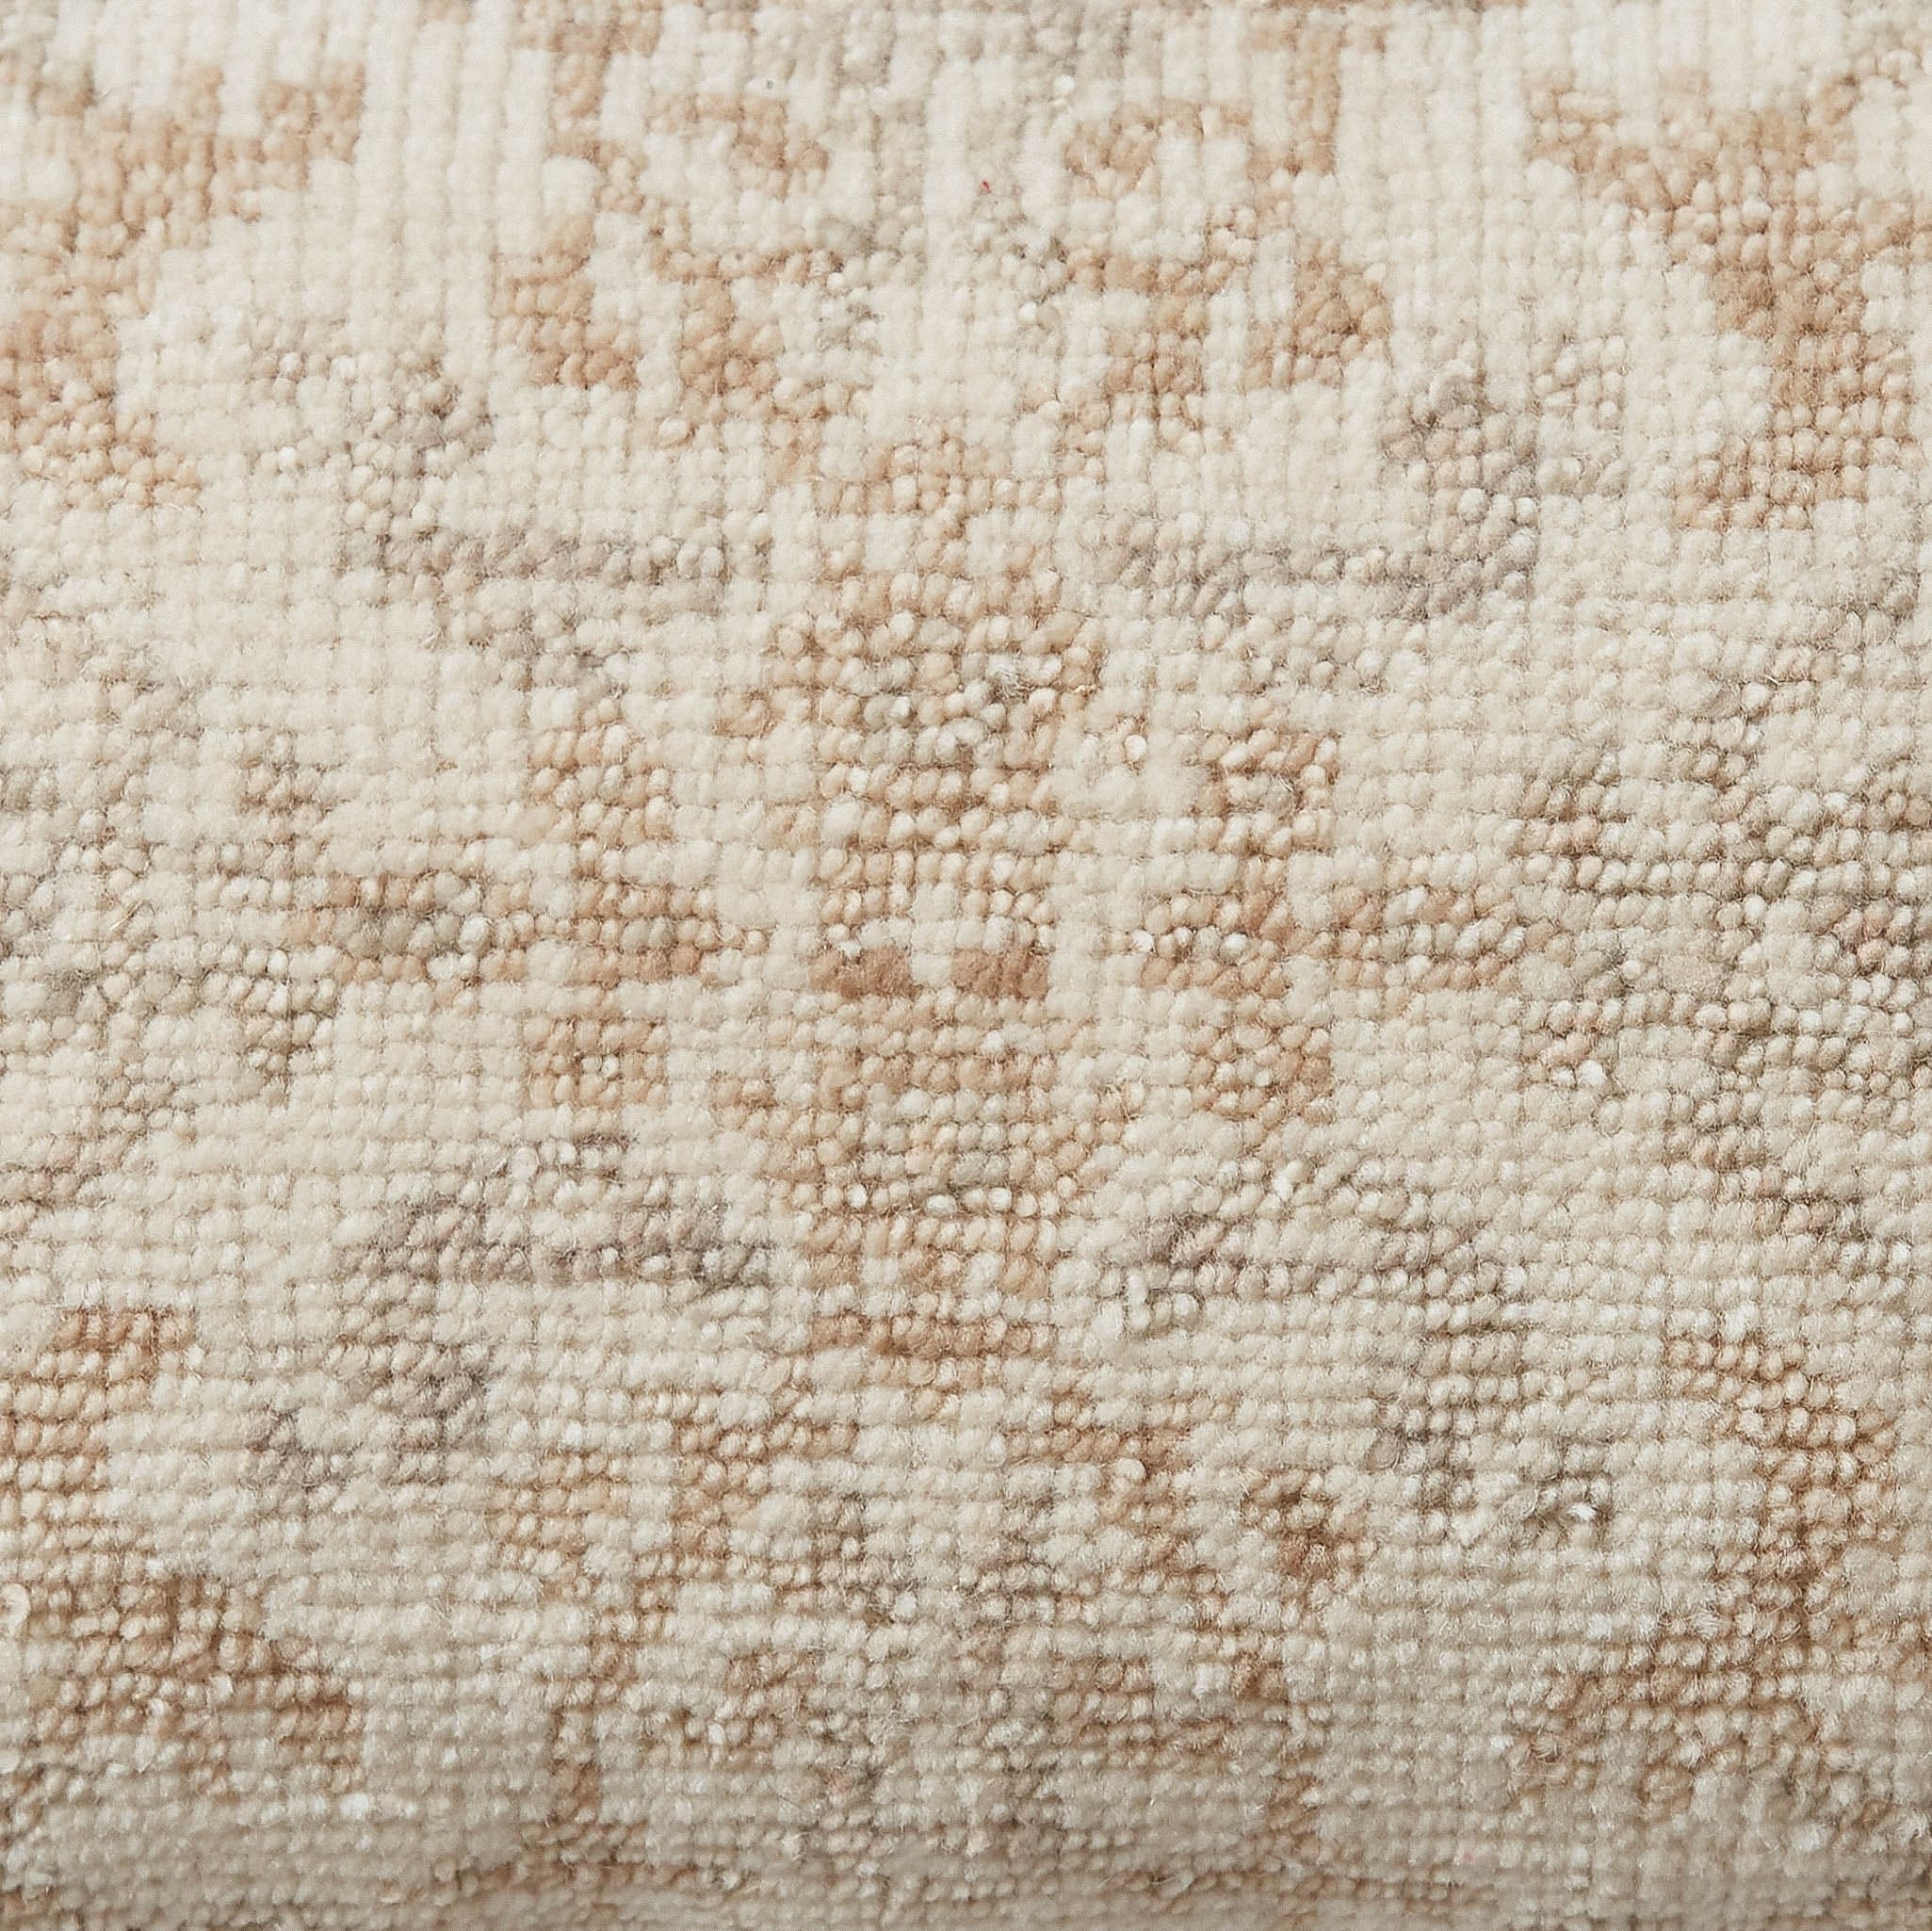 The Citizenry Akira Hand-Knotted Lumbar Pillow | 12" x 20" | Sand - Image 2